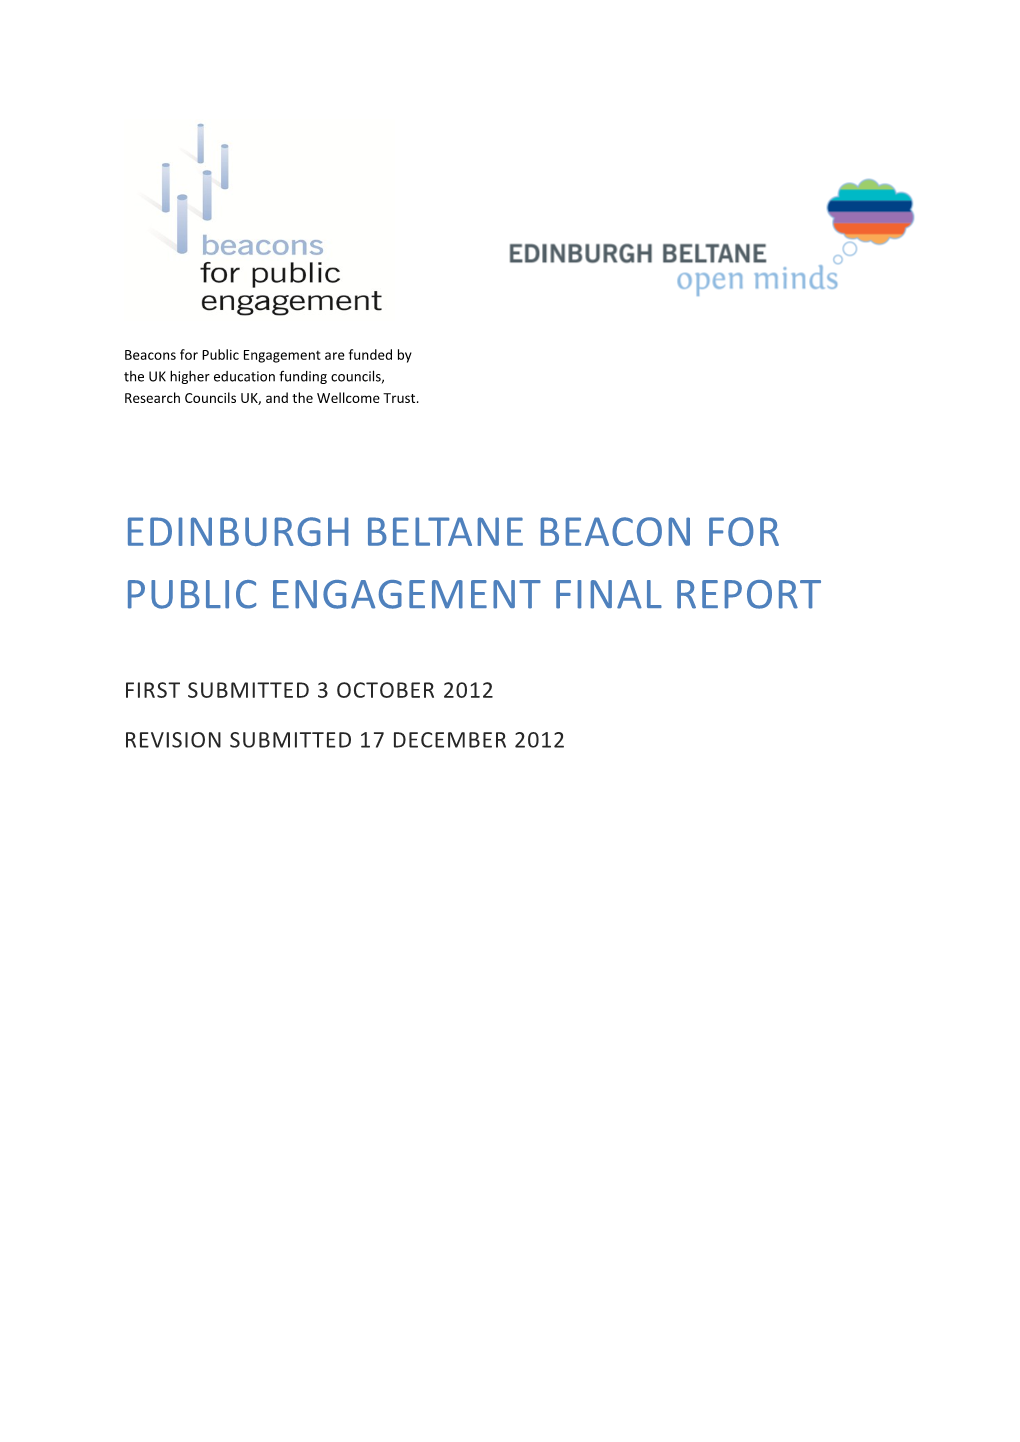 Edinburgh Beltane Beacon Final Report